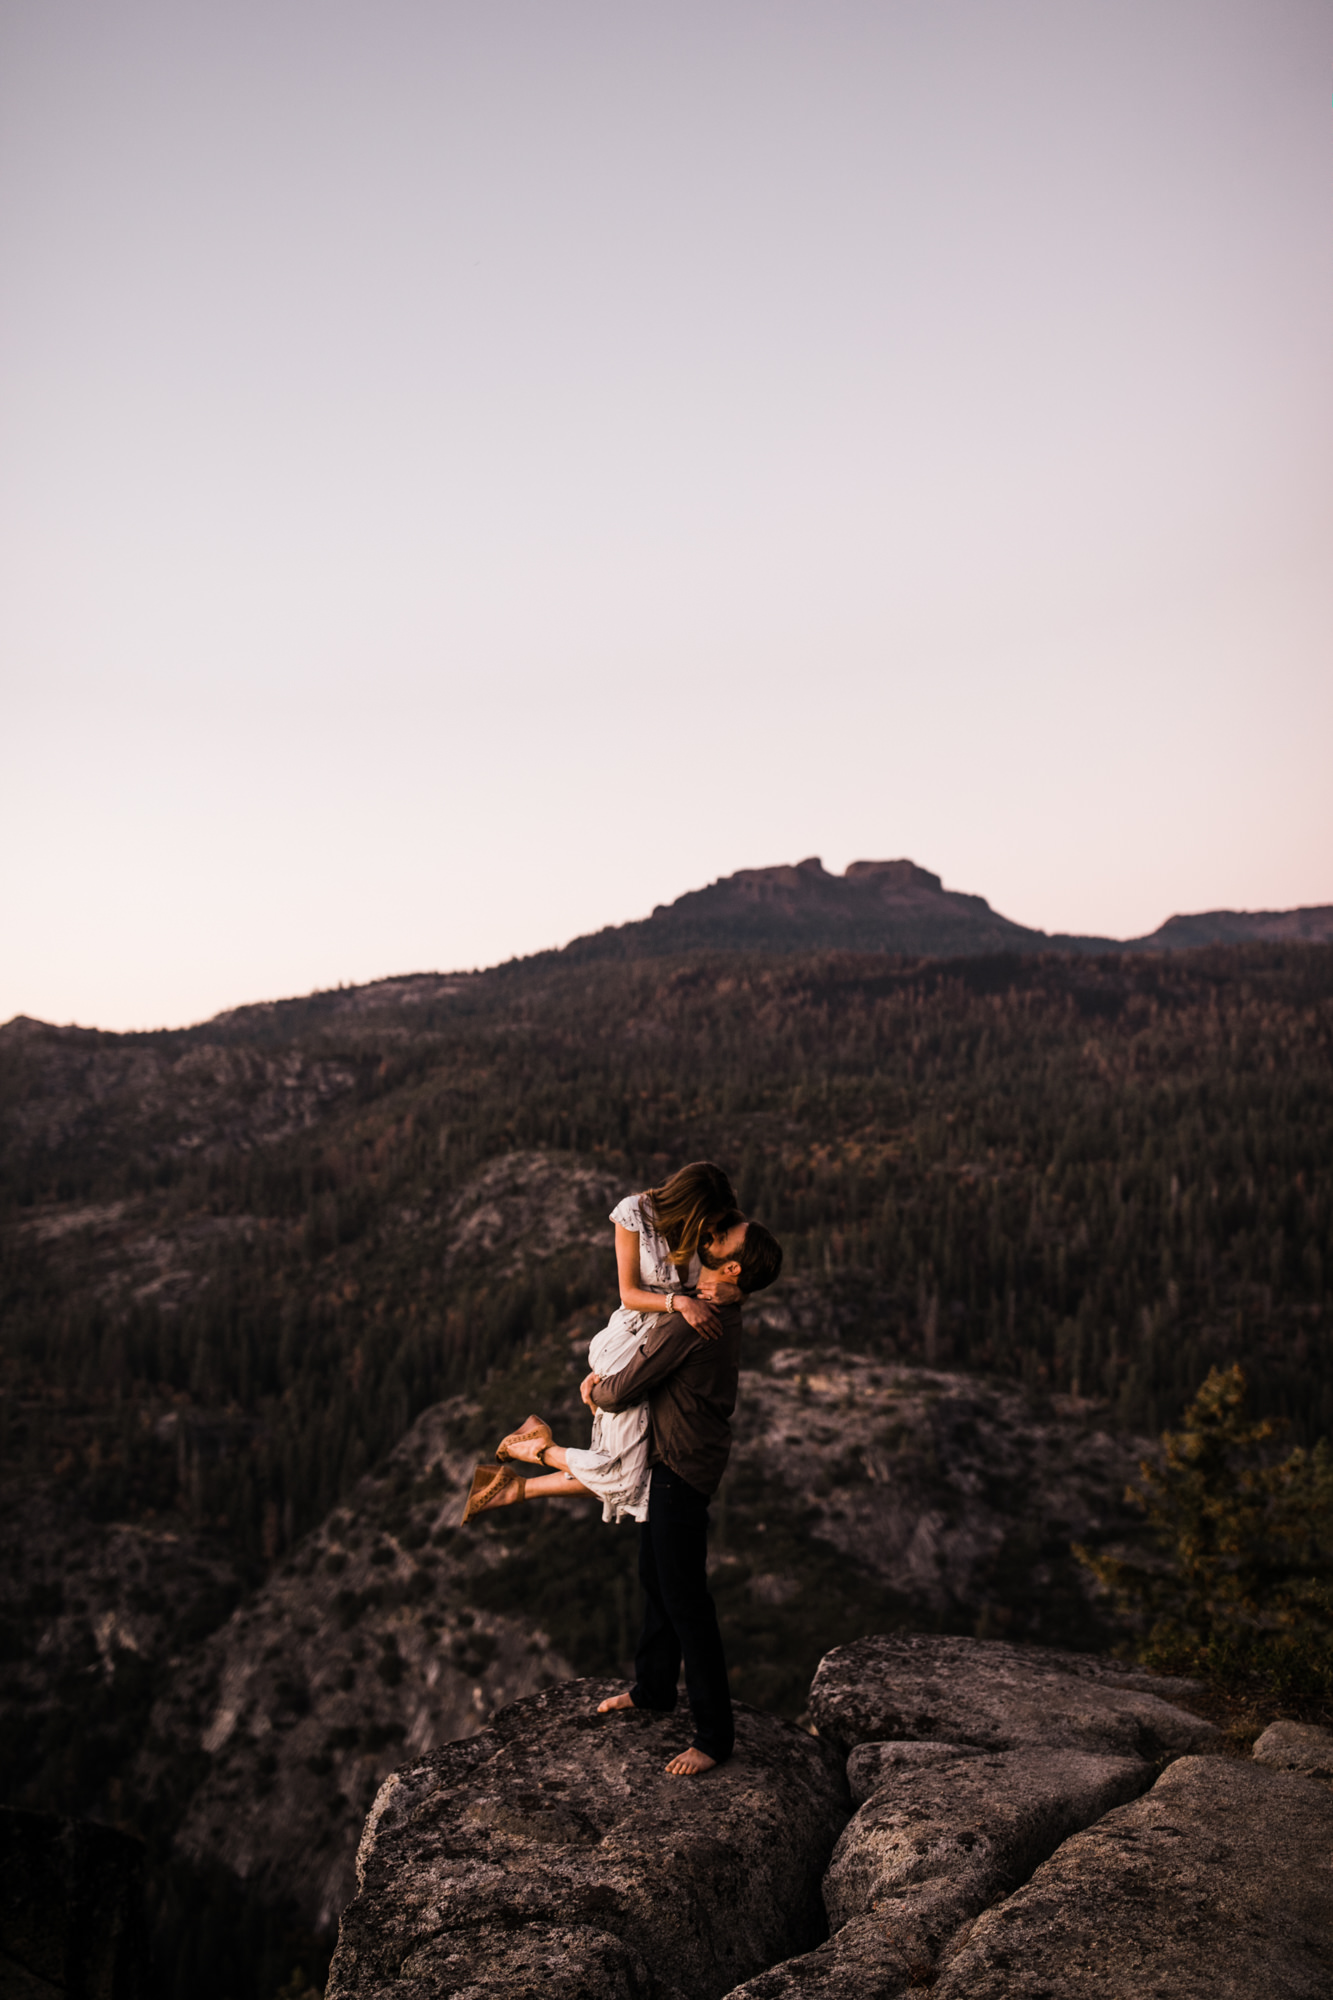 lauren + nick's adventurous national forest engagement session | california adventure elopement photographer | the hearnes adventure photography | www.thehearnes.com